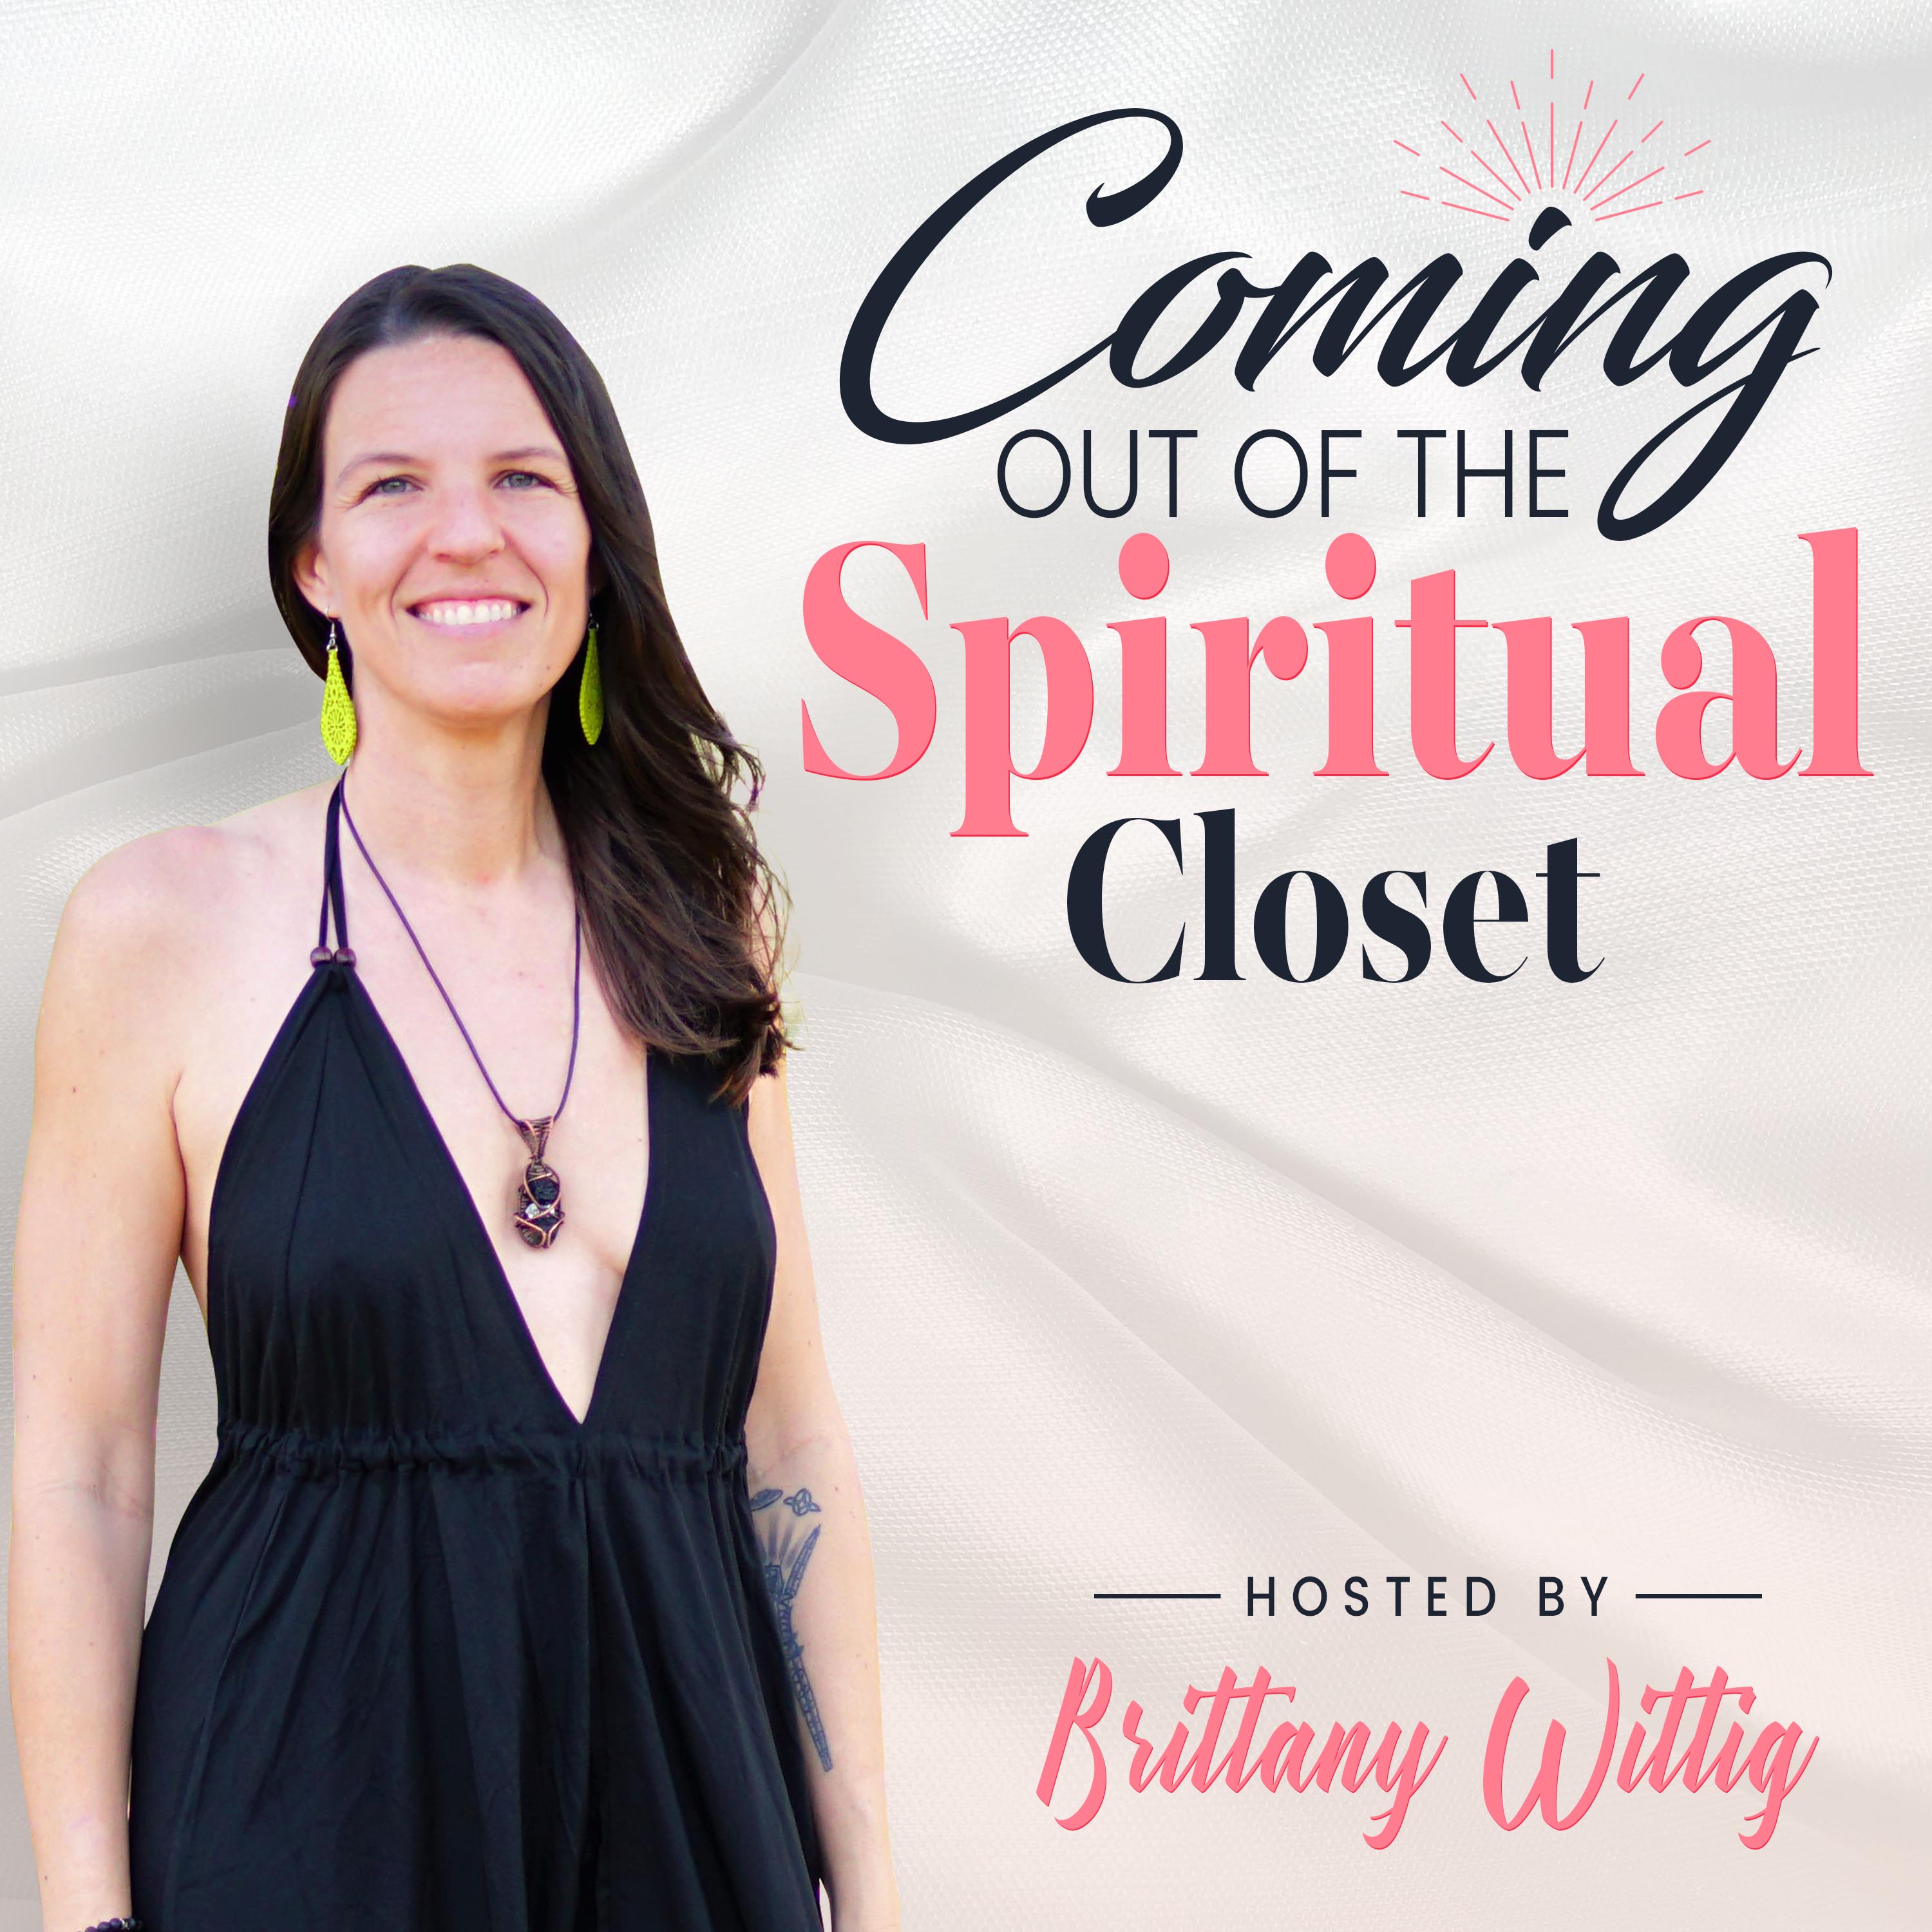 Coming out of the Spiritual Closet